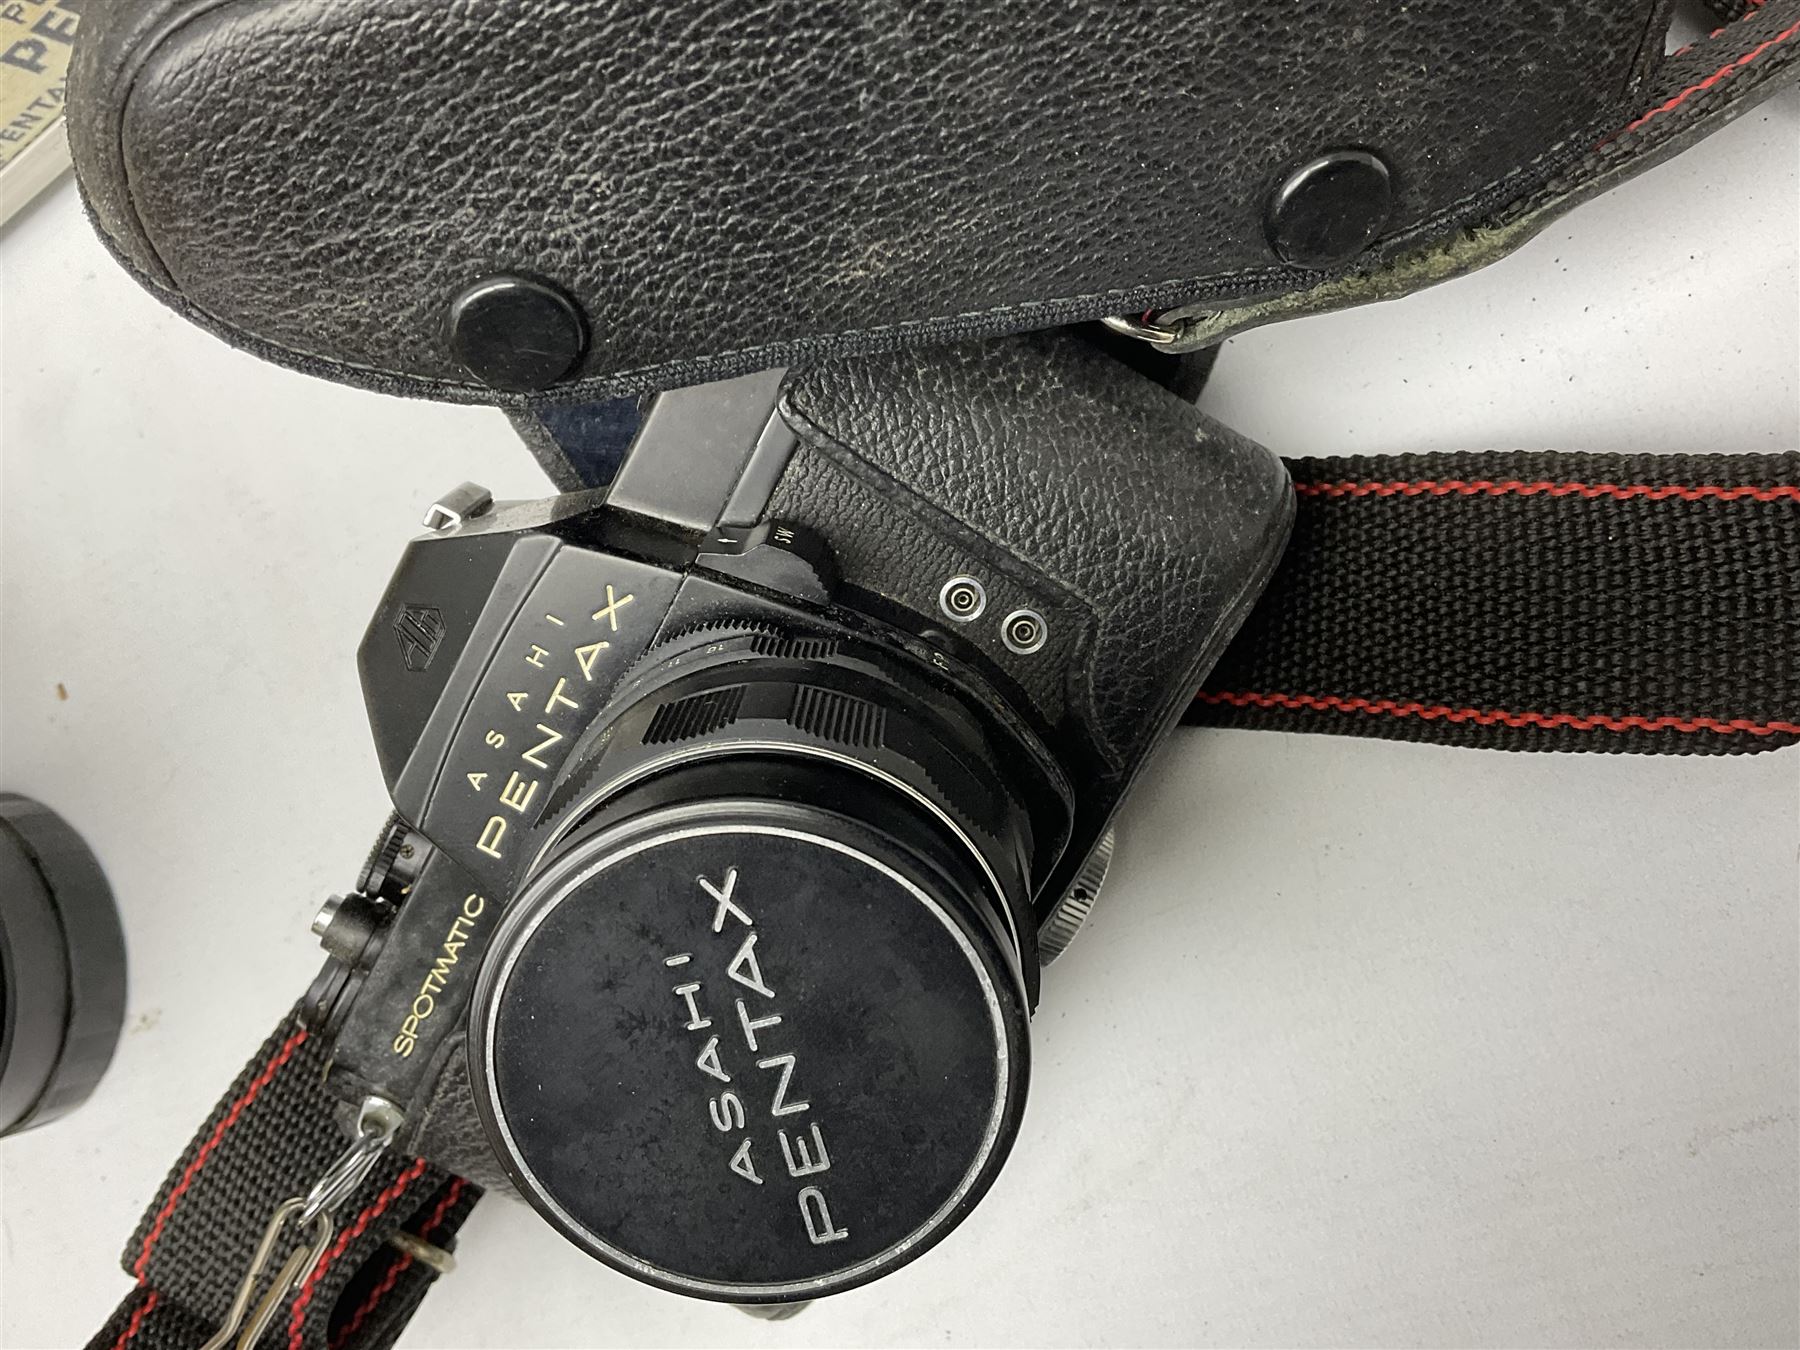 Asahi Pentax Spotmatic SPII camera - Image 3 of 5